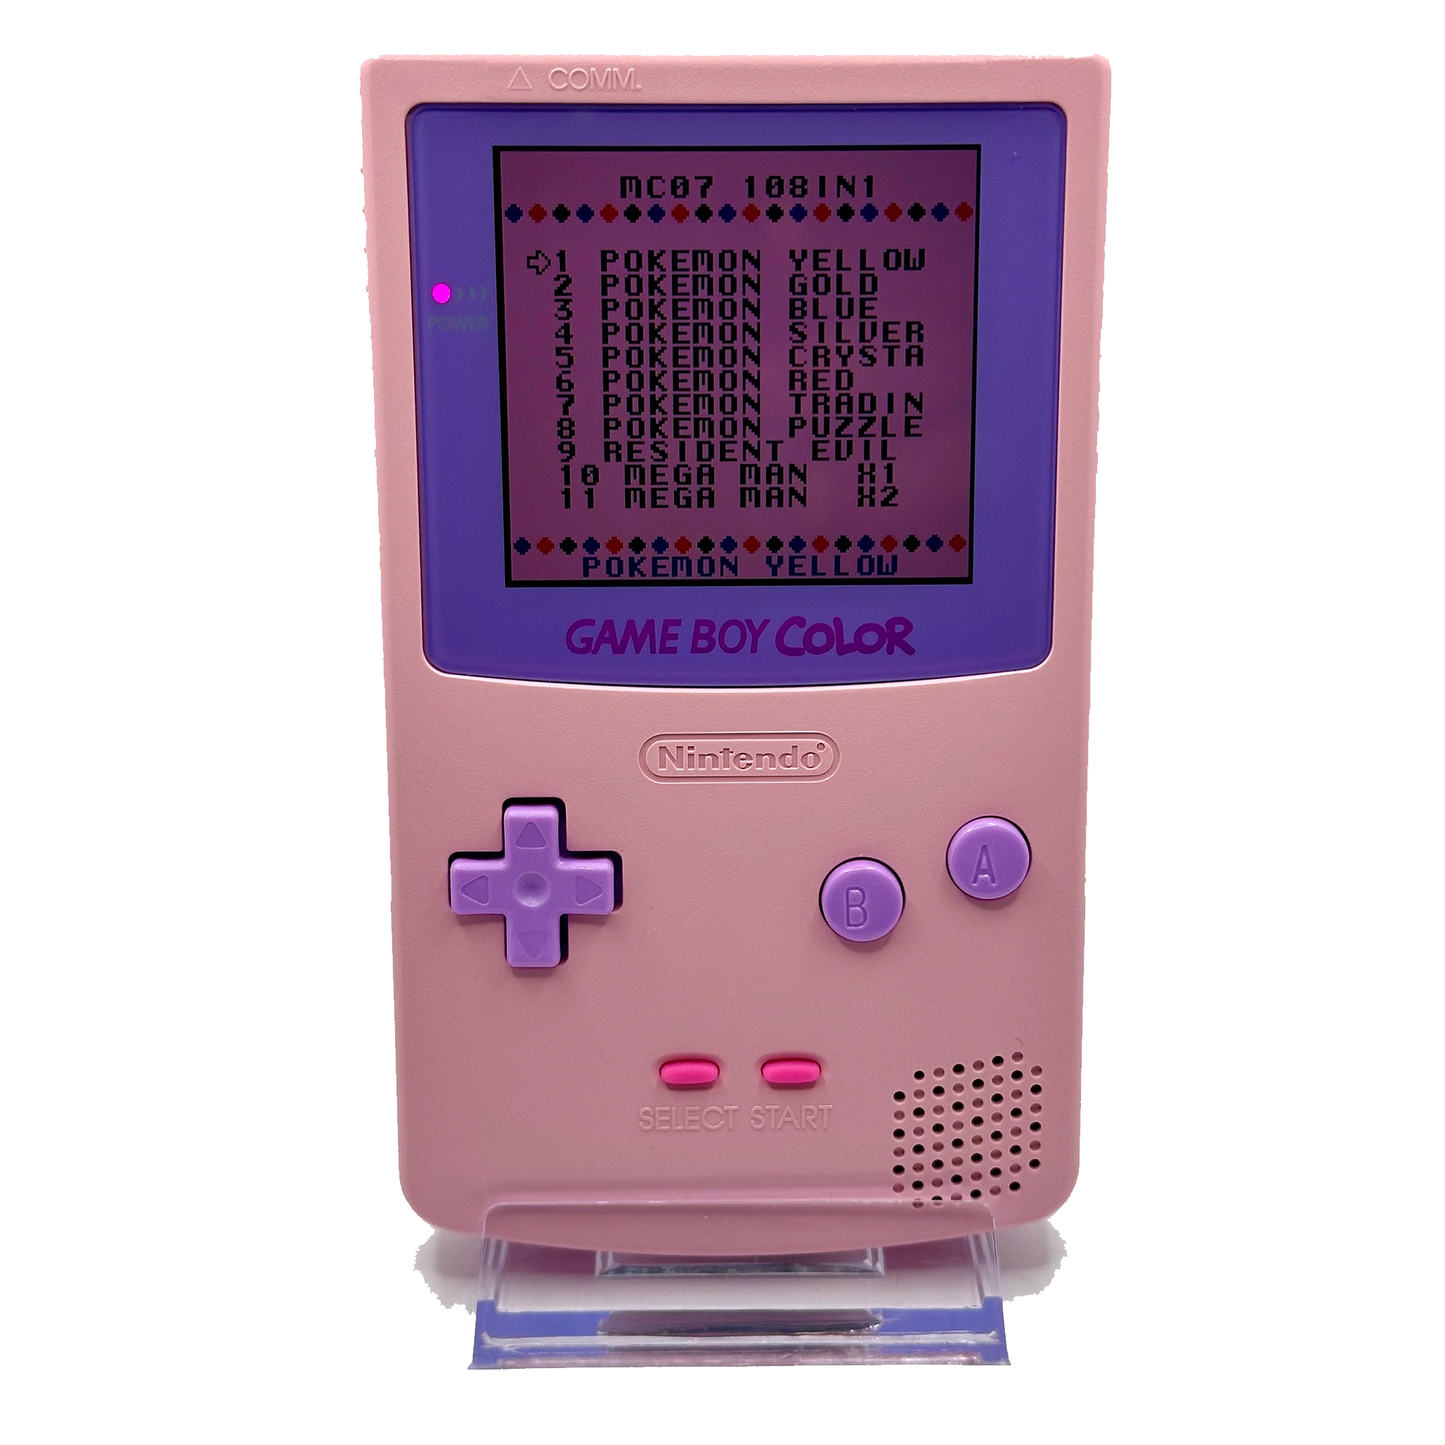 Create Custom Game Boy Color